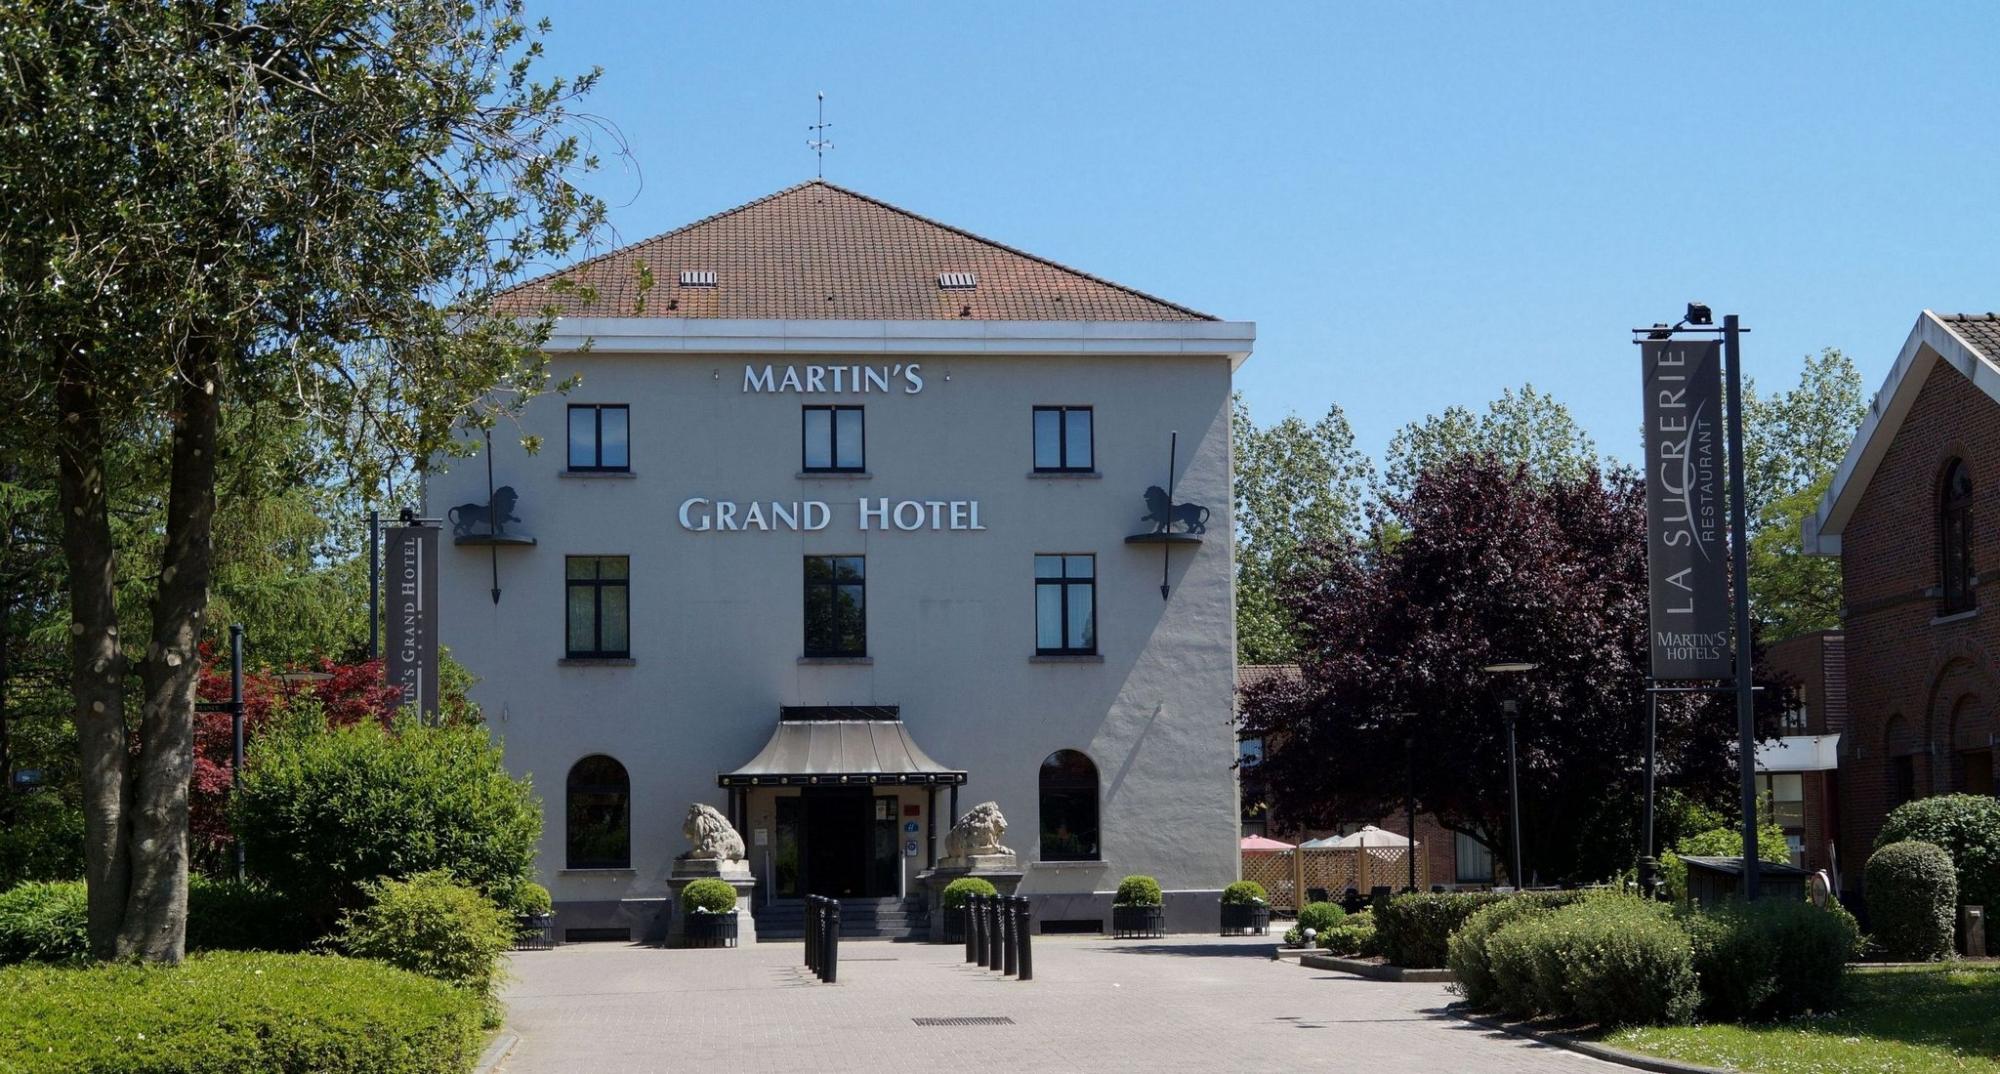 Martins Grand Hotel